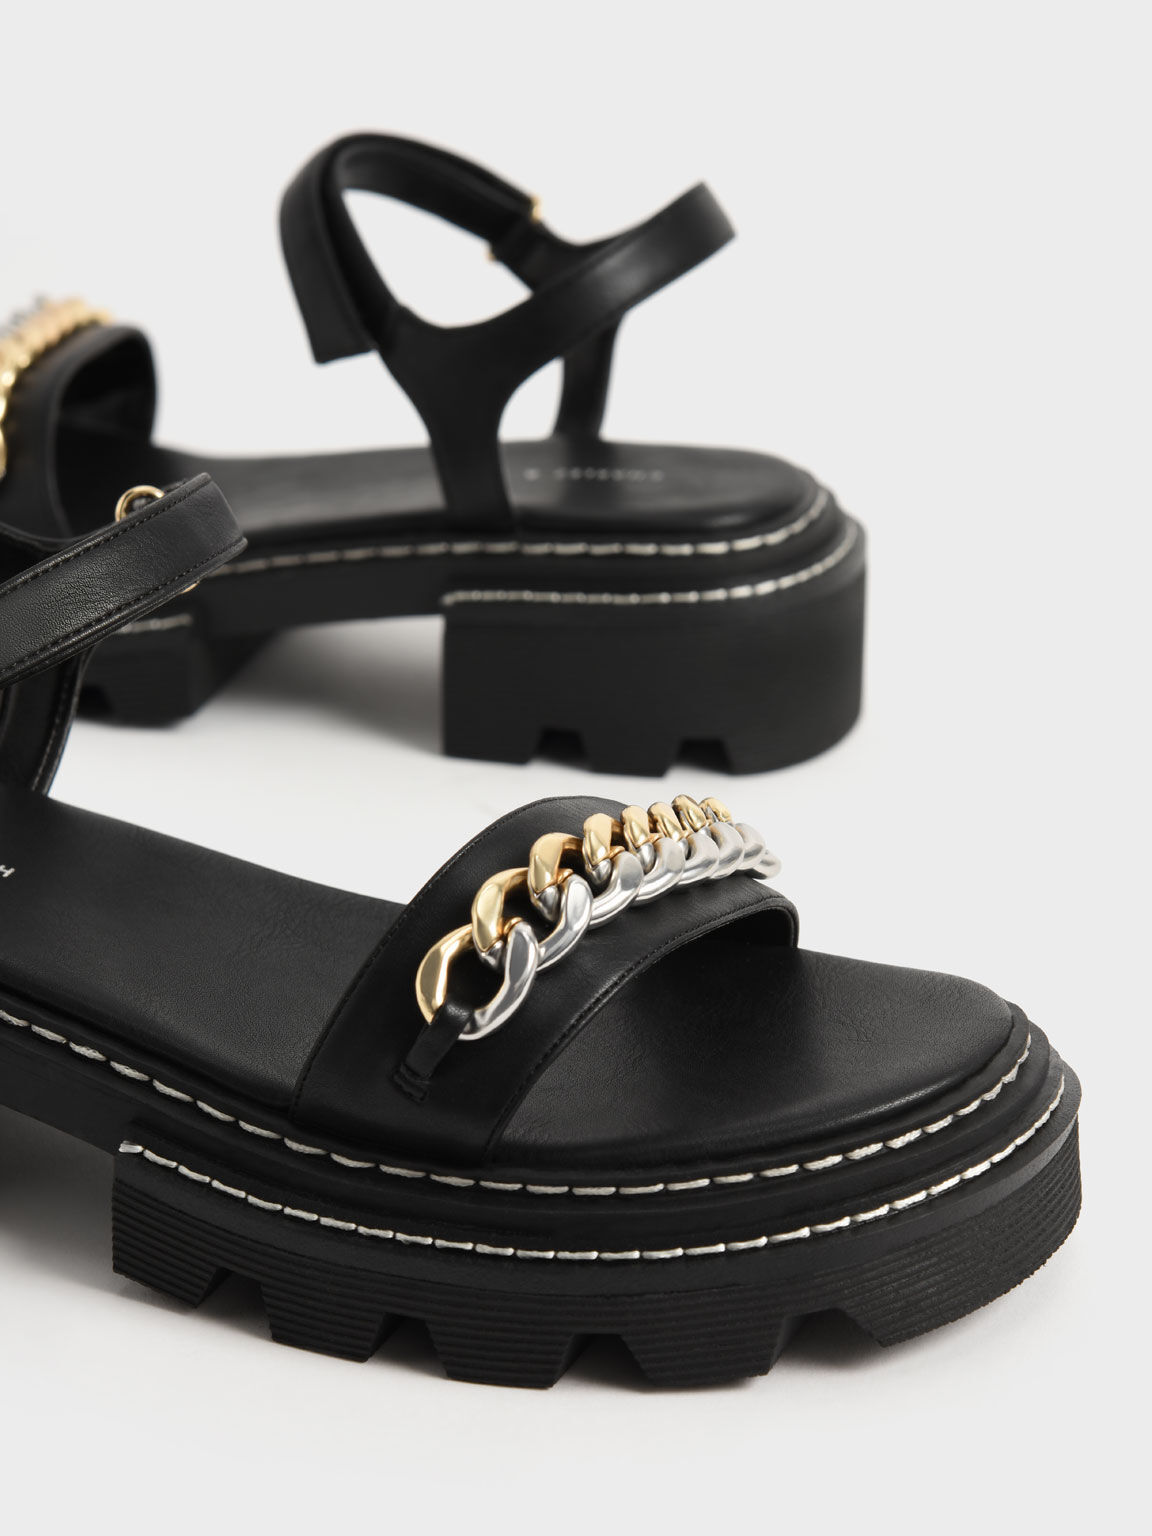 Chain-Link Contrast-Trim Sandals, Black, hi-res